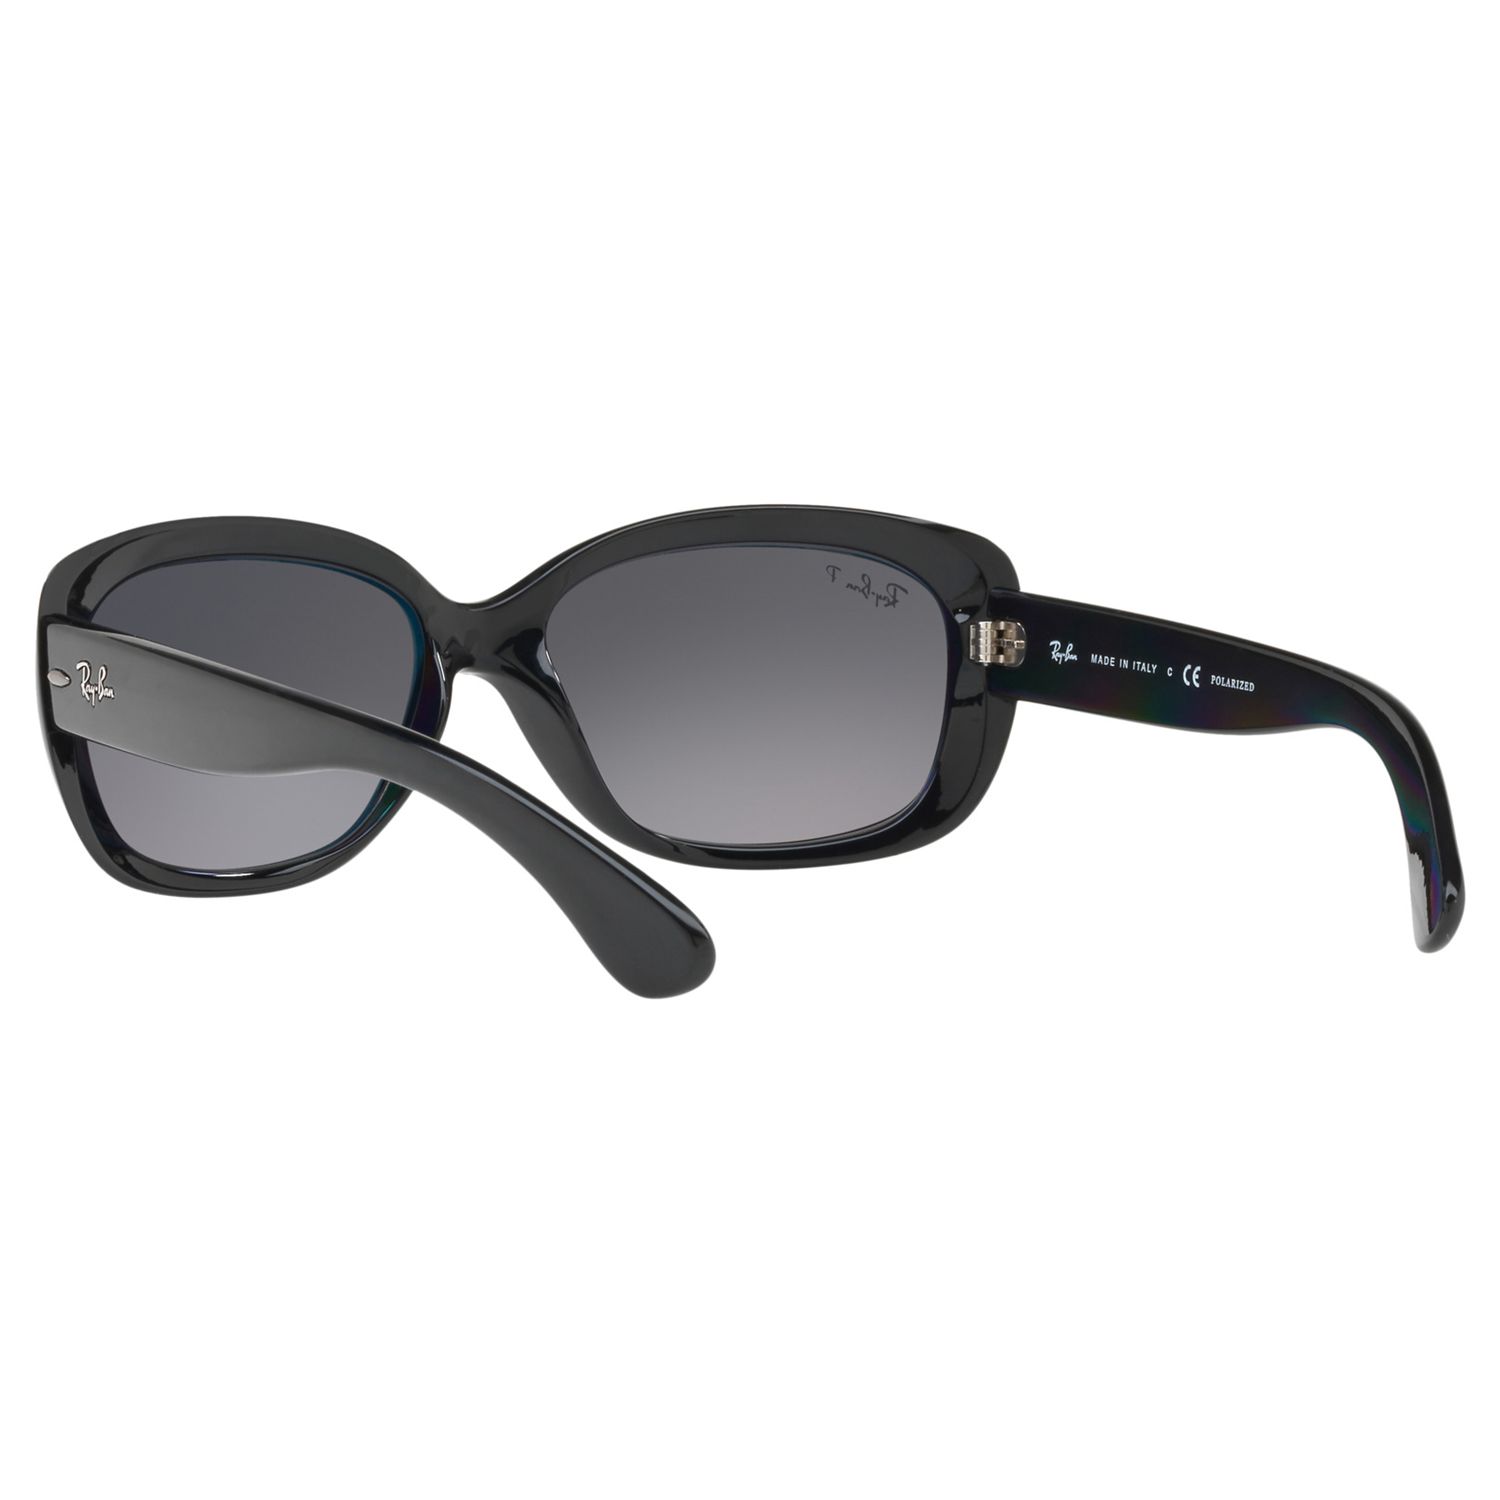 Ray-Ban RB4101 Polarised Jackie Ohh Rectangular Sunglasses, Black/Grey Gradient